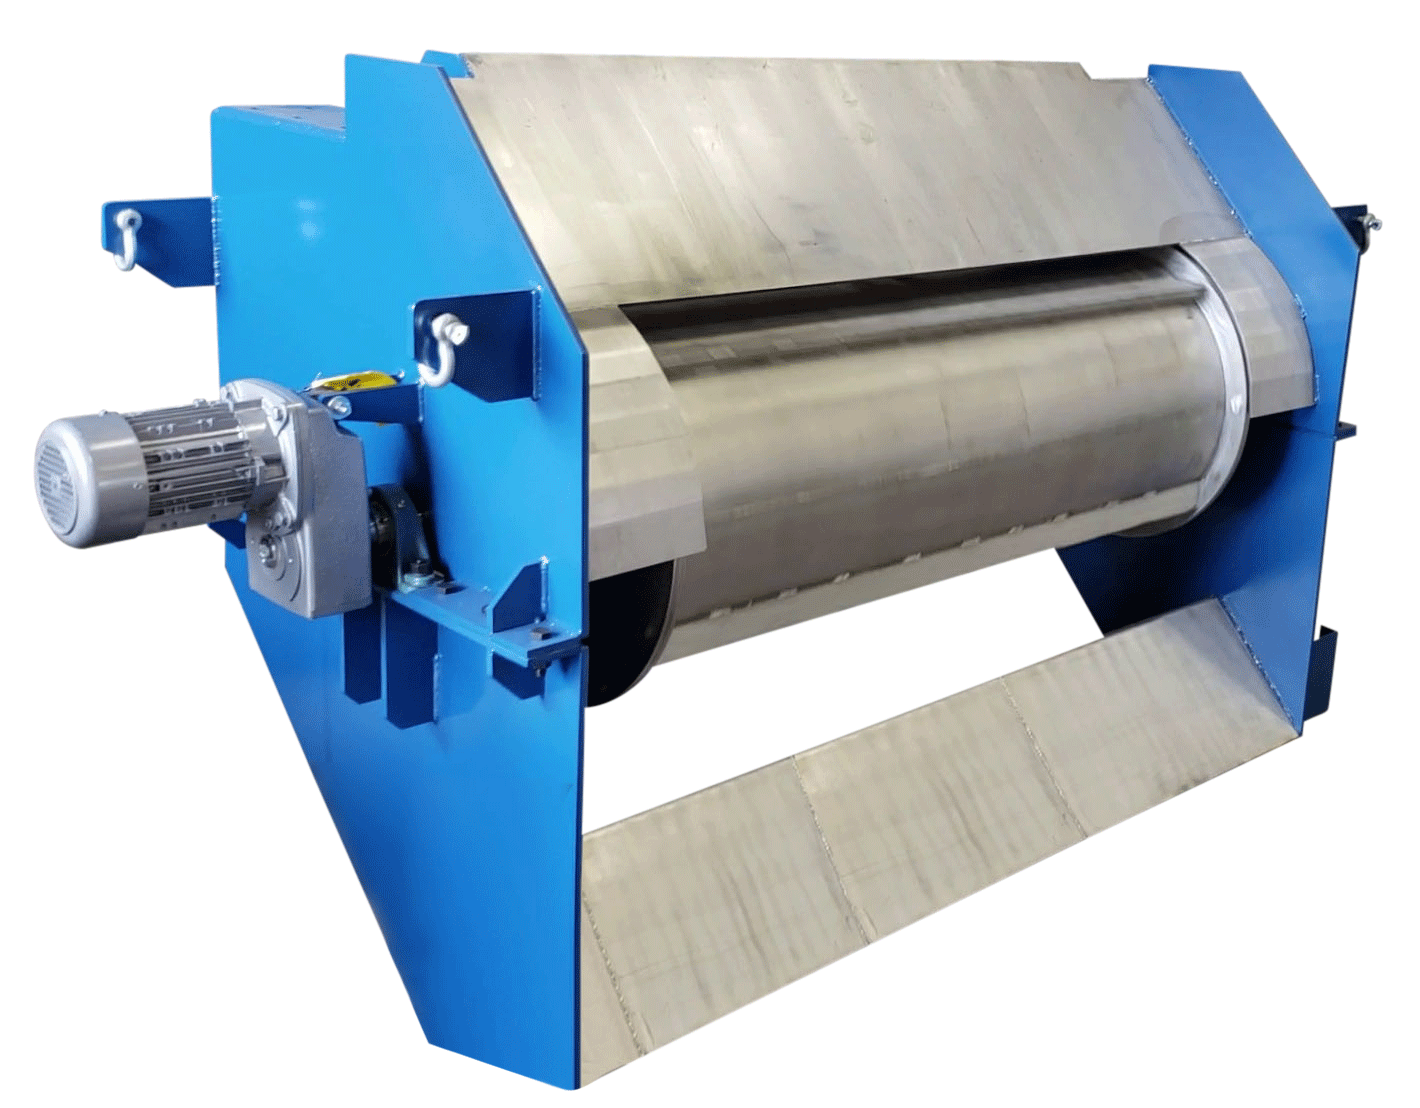 A large round magnetic hog fuel separator